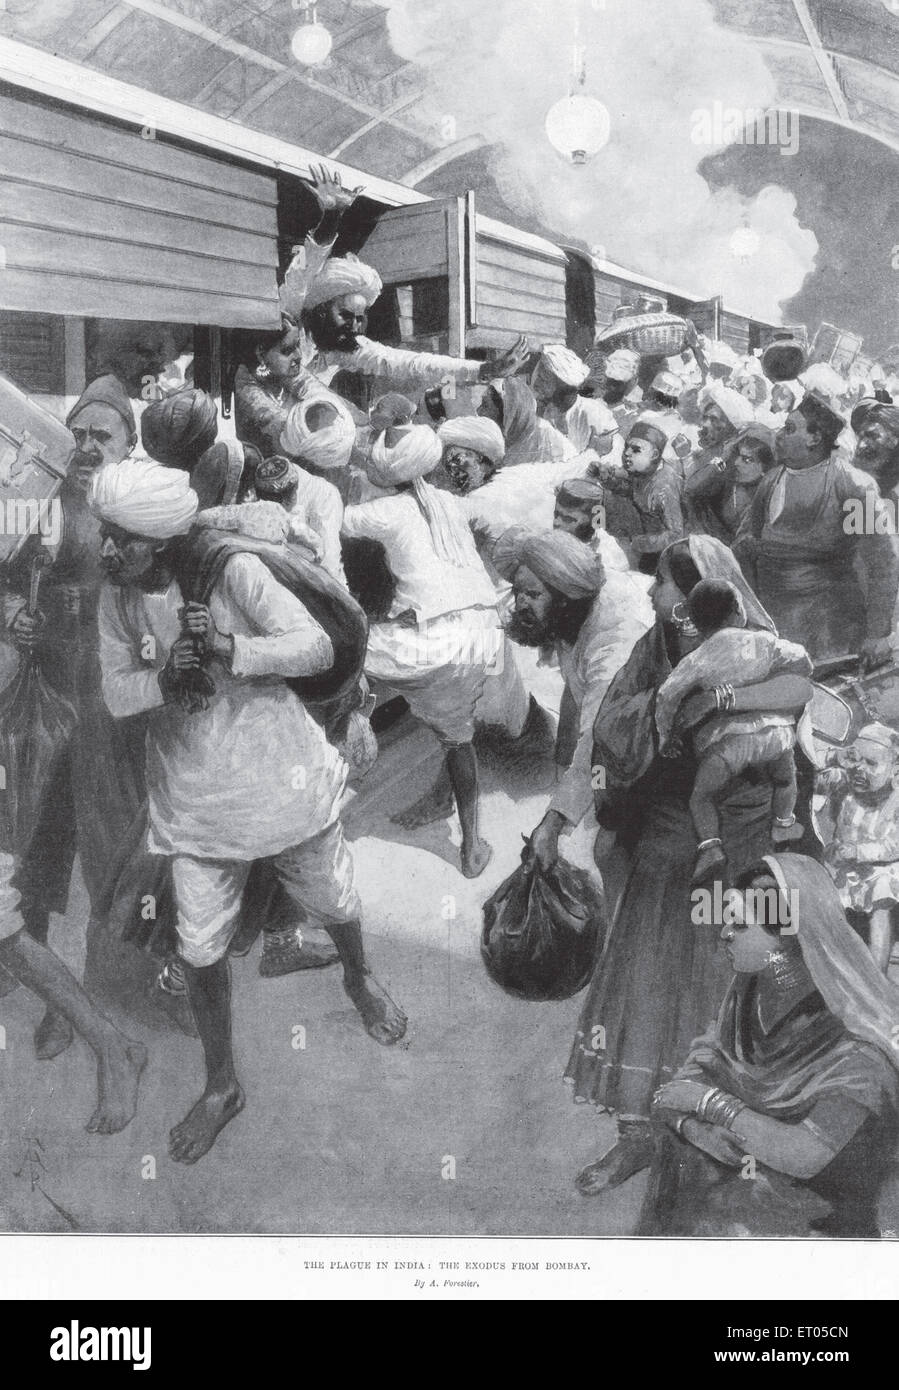 Bombay Pestepidemie, Beulenpest Epidemie, die Pest Grippe Virus Epidemie Exodus Bombay Mumbai Maharashtra Indien Indianer alter Jahrgang 1800s Bild Stockfoto